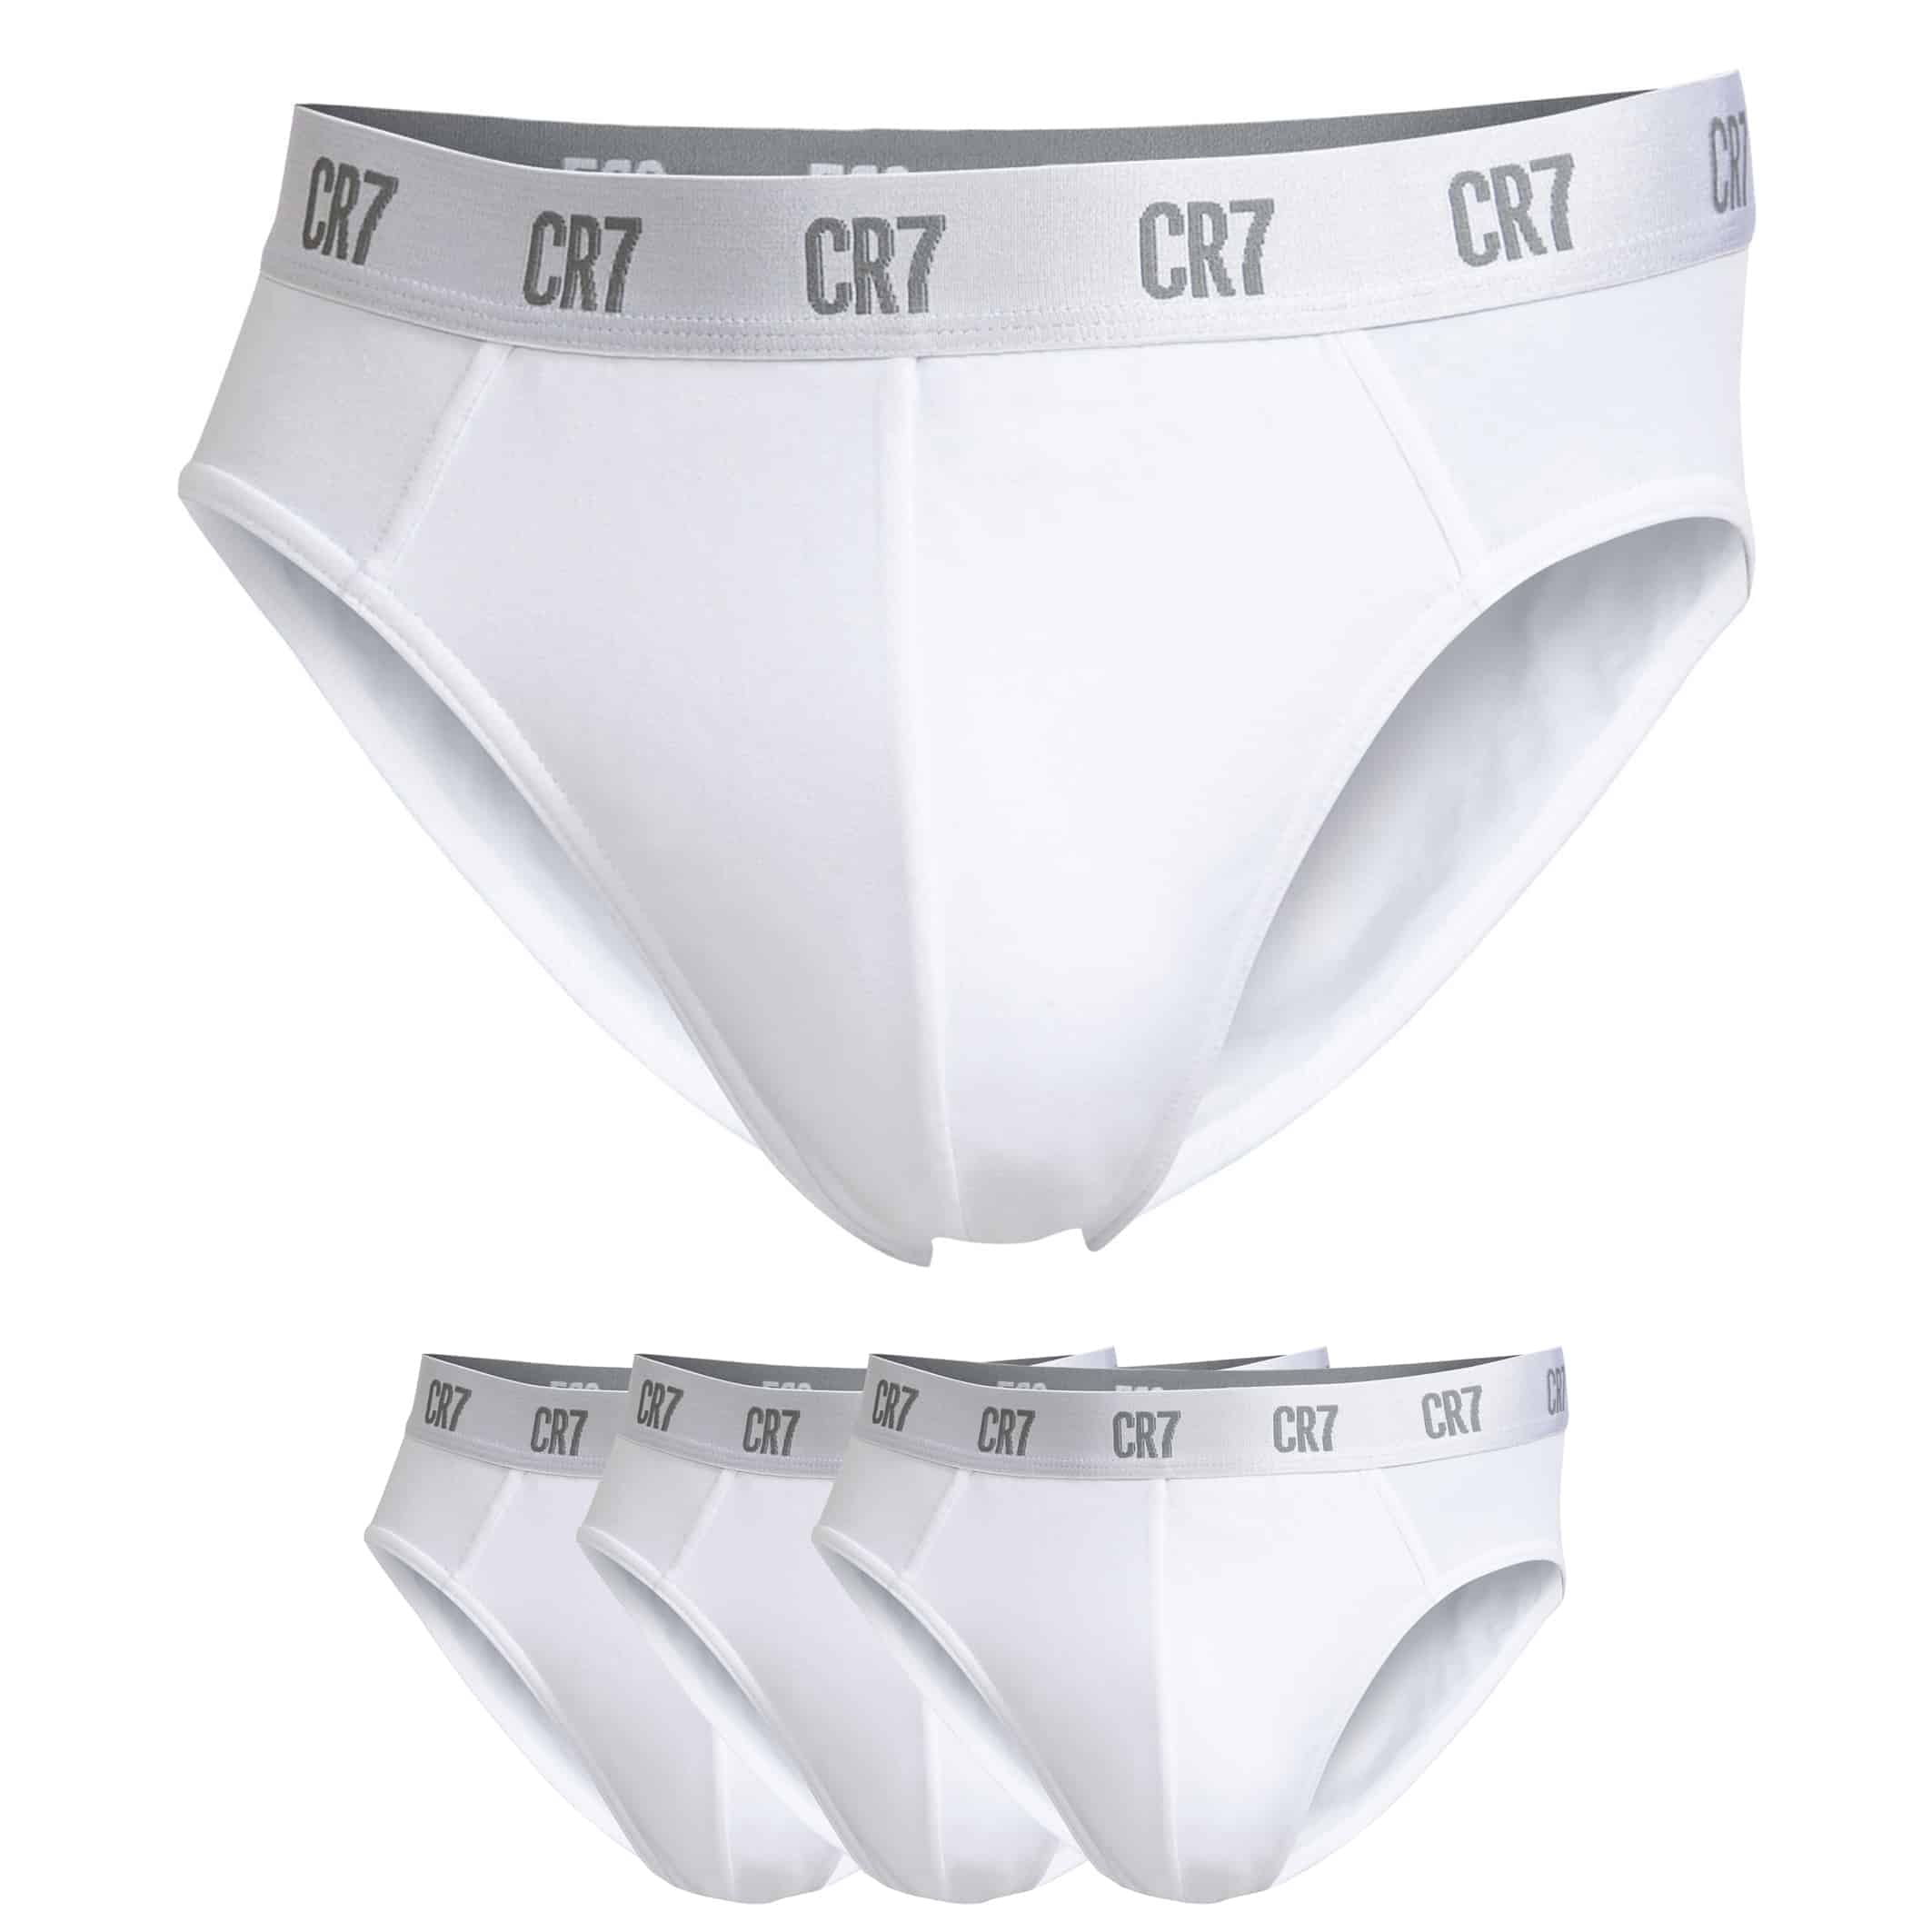 Cristiano Ronaldo CR7 Basic 3-Pack Cotton Briefs Men's Underwear XL 